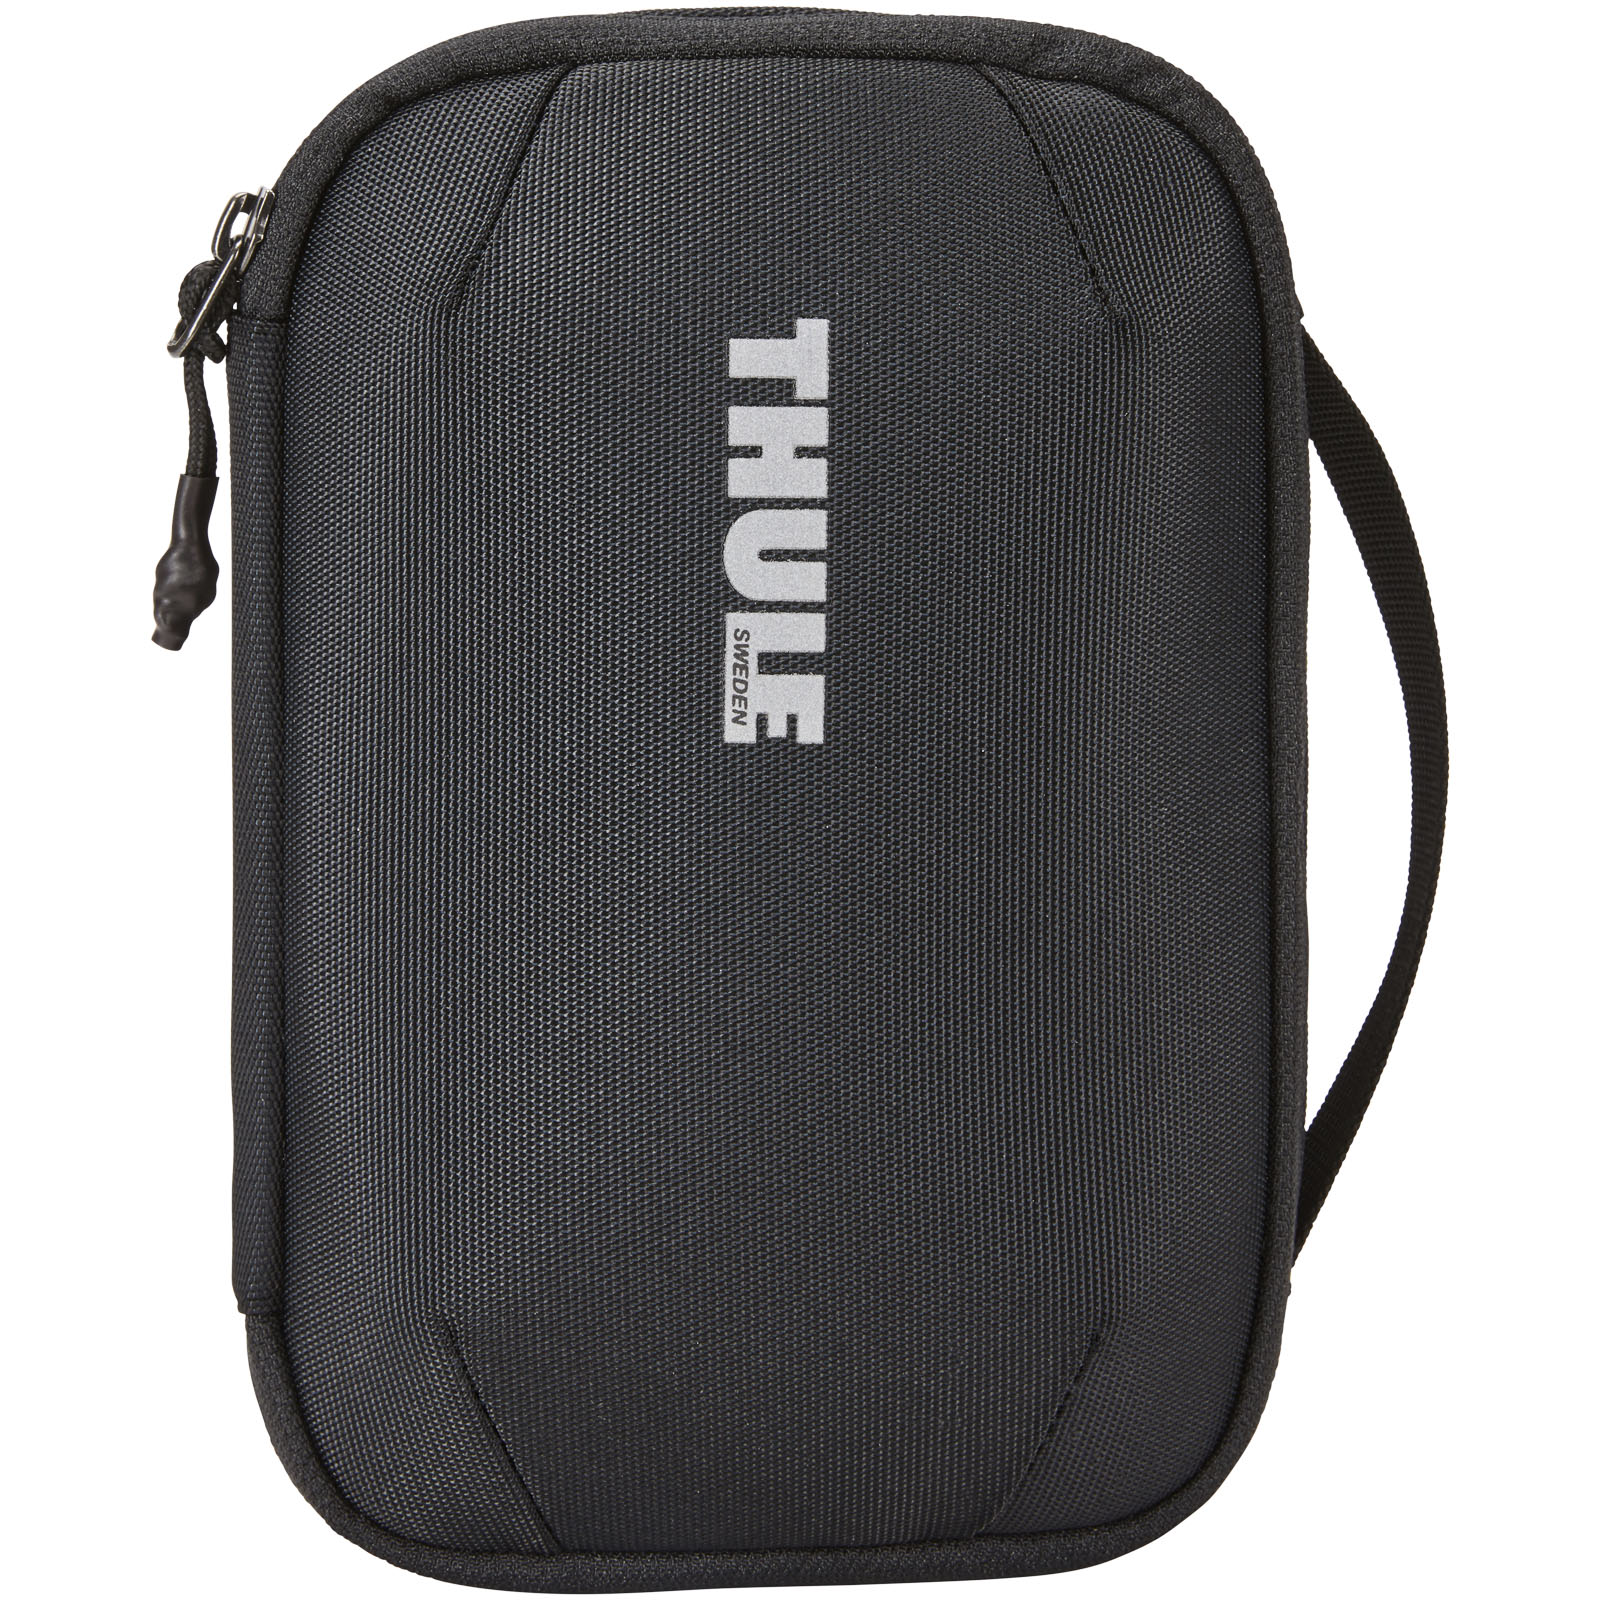 Advertising Travel Accessories - Thule Subterra PowerShuttle accessories bag - 1